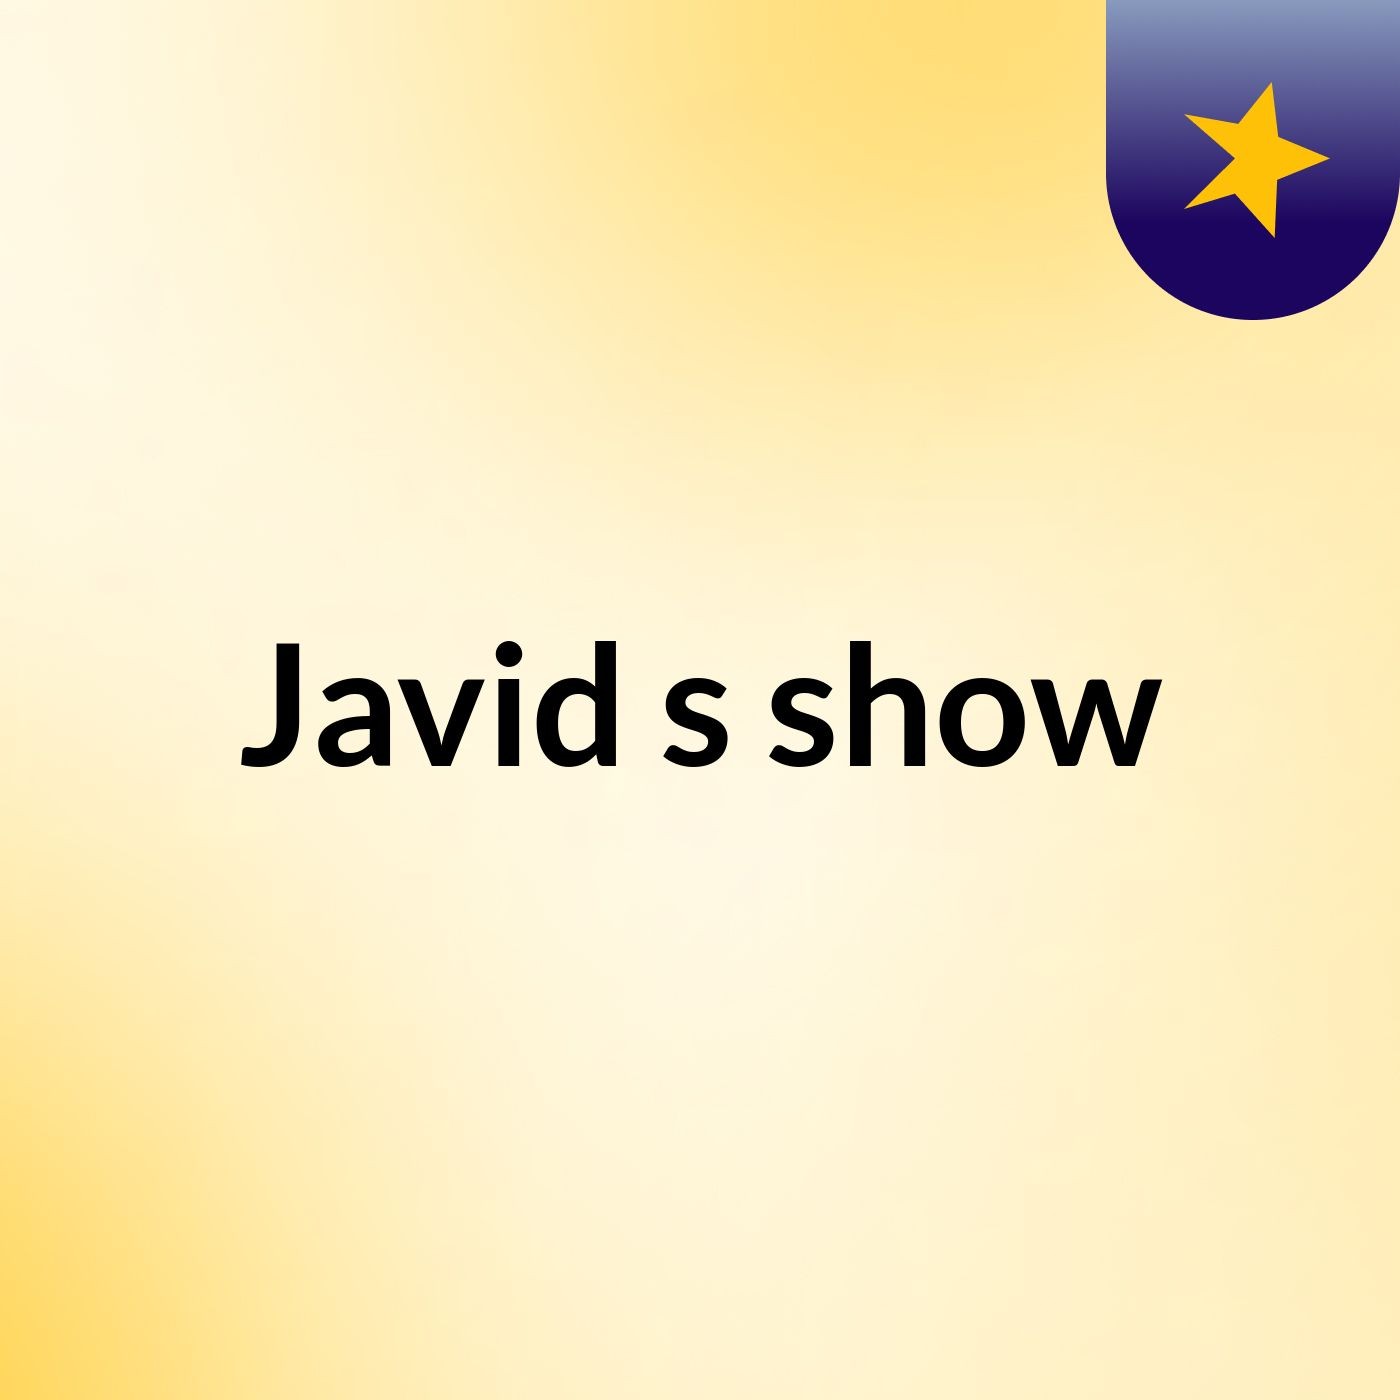 Javid's show